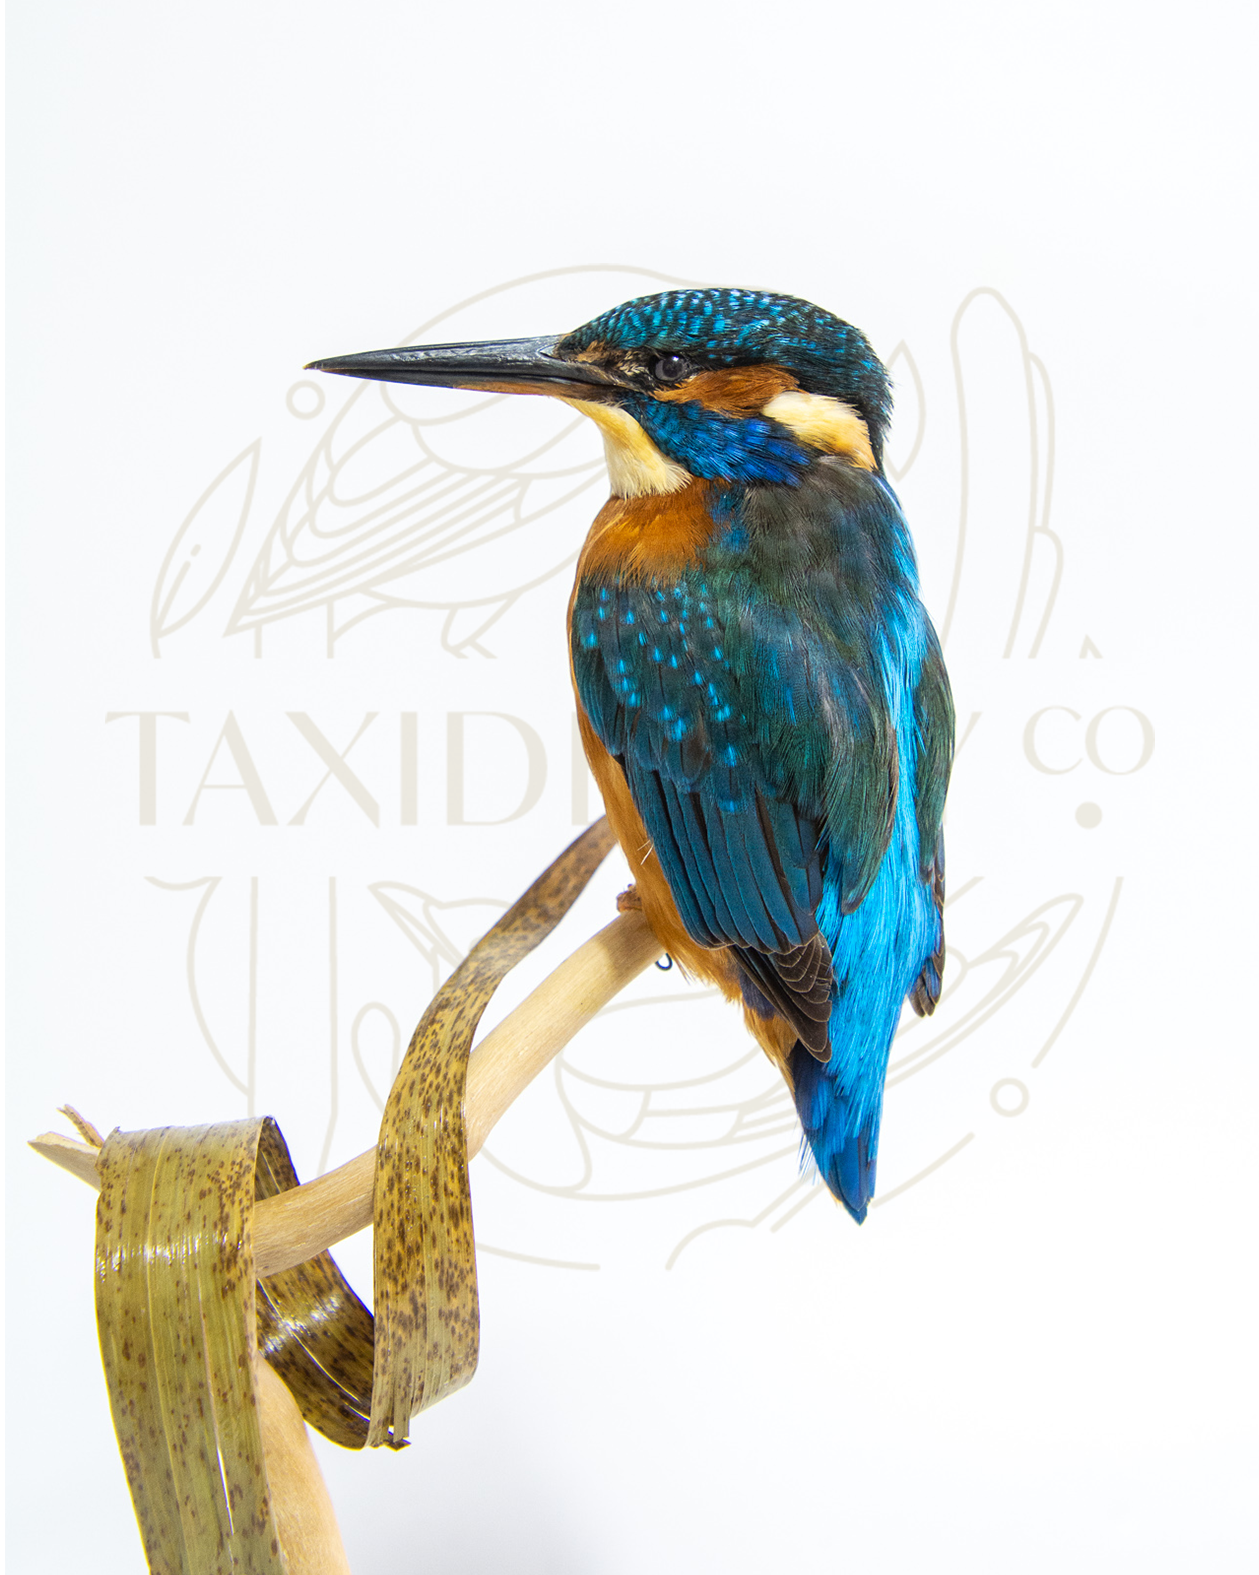 Taxidermy Kingfisher (Alcedo atthis) Bird